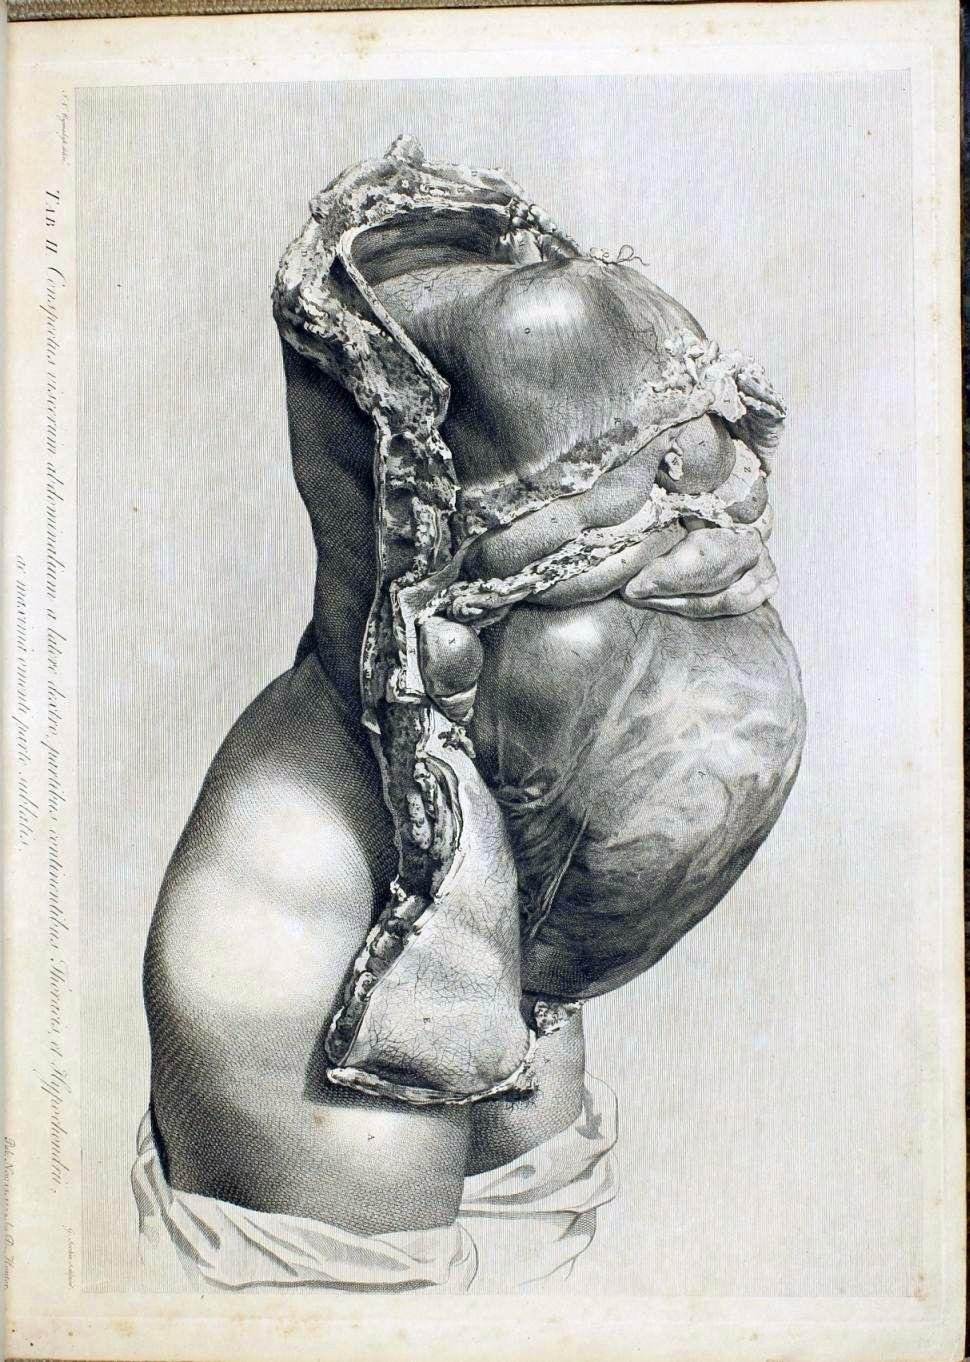 1774- Fetus in the Womb- William Hunter0.jpg